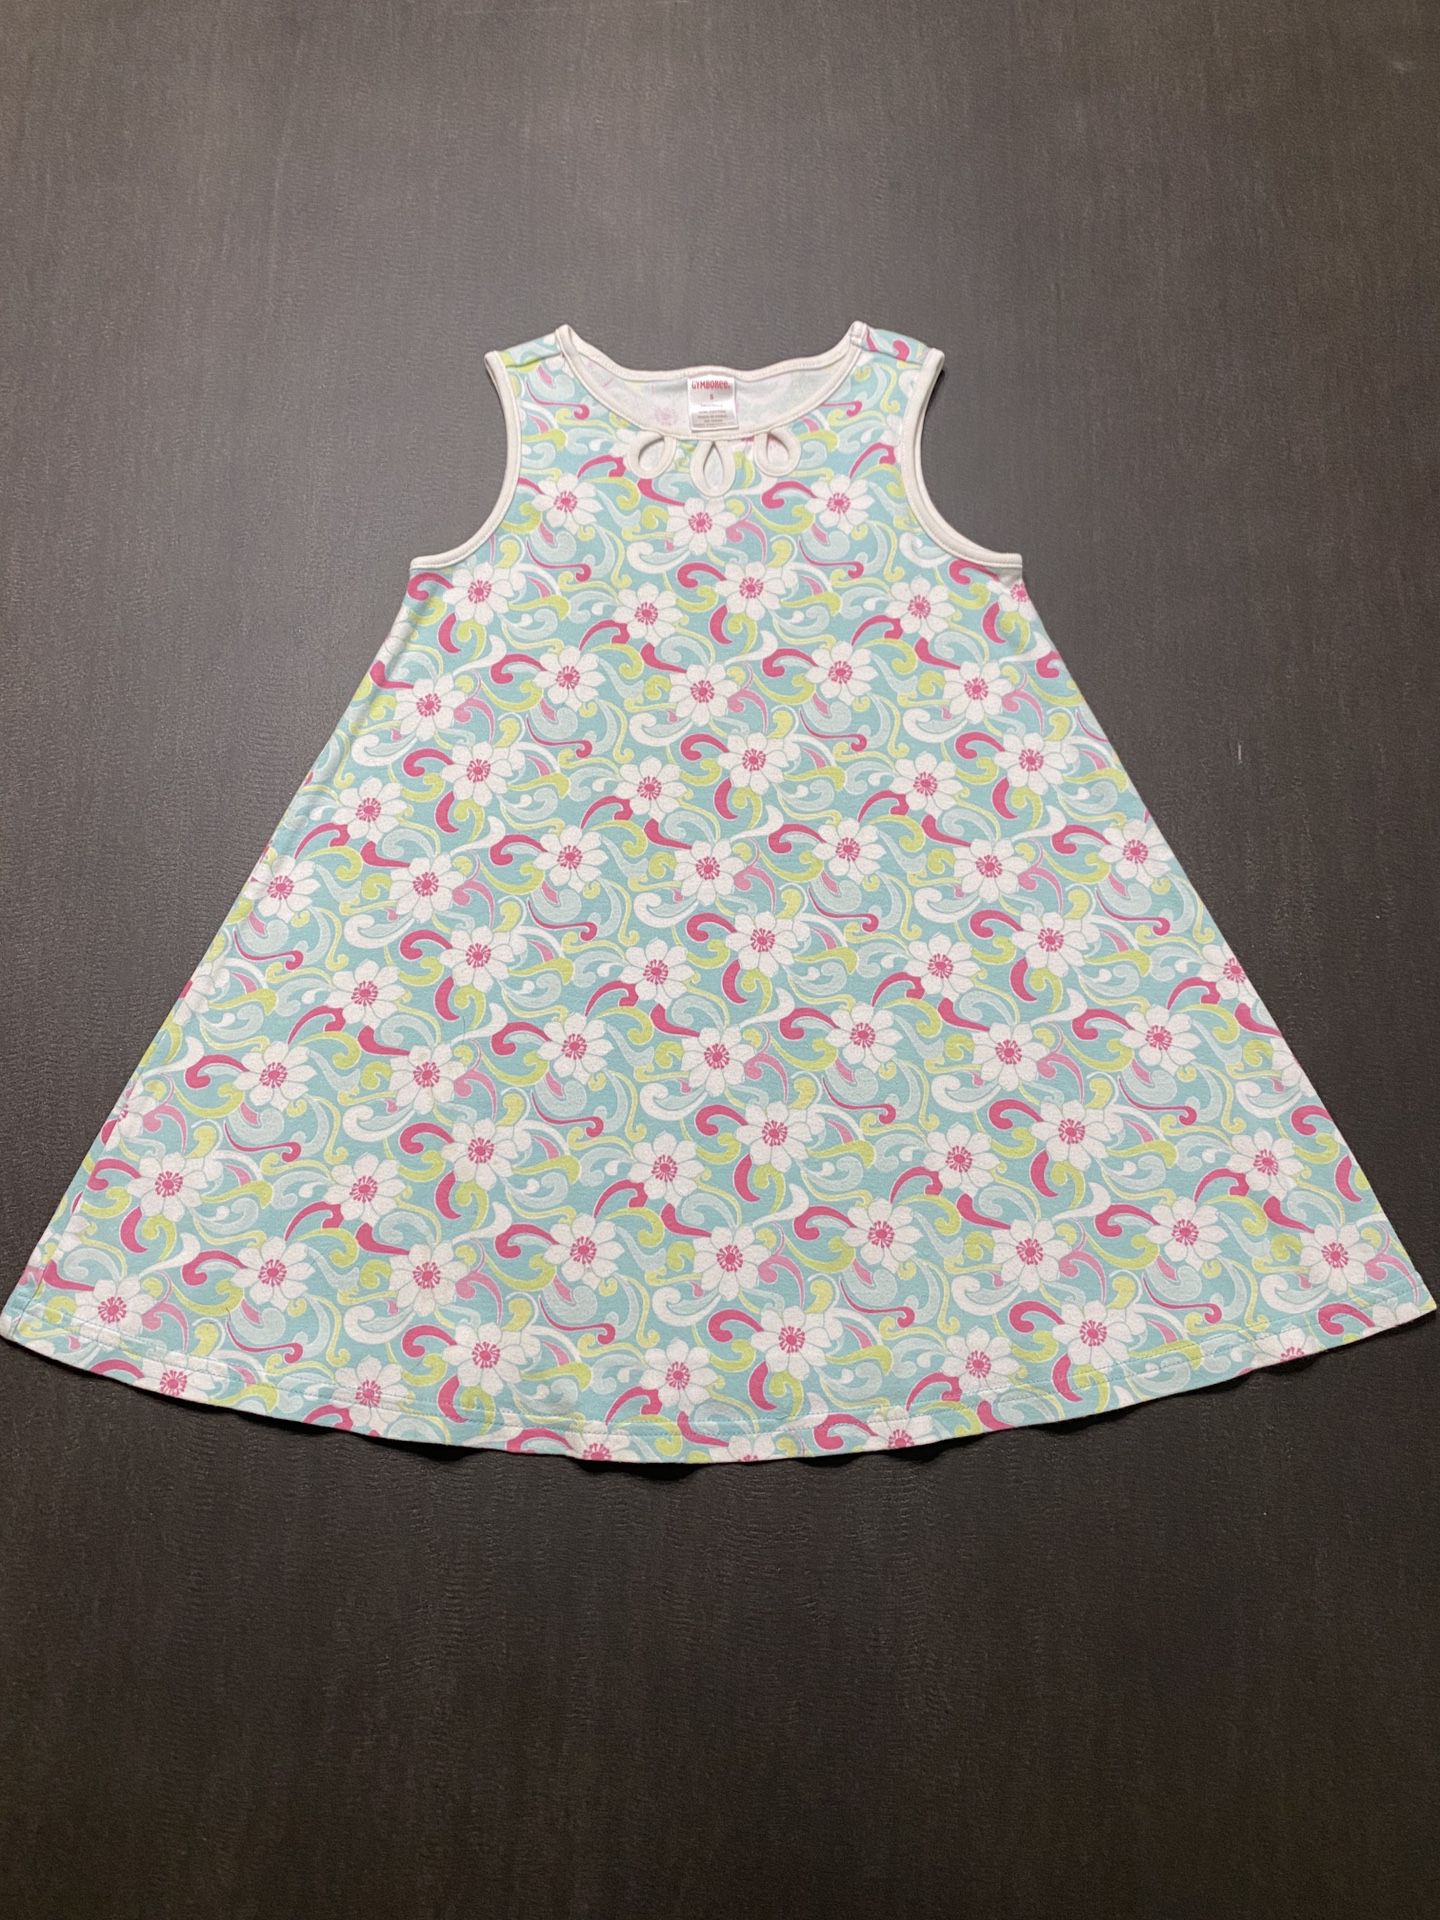 Girl’s Dress, Gymboree - Size 5